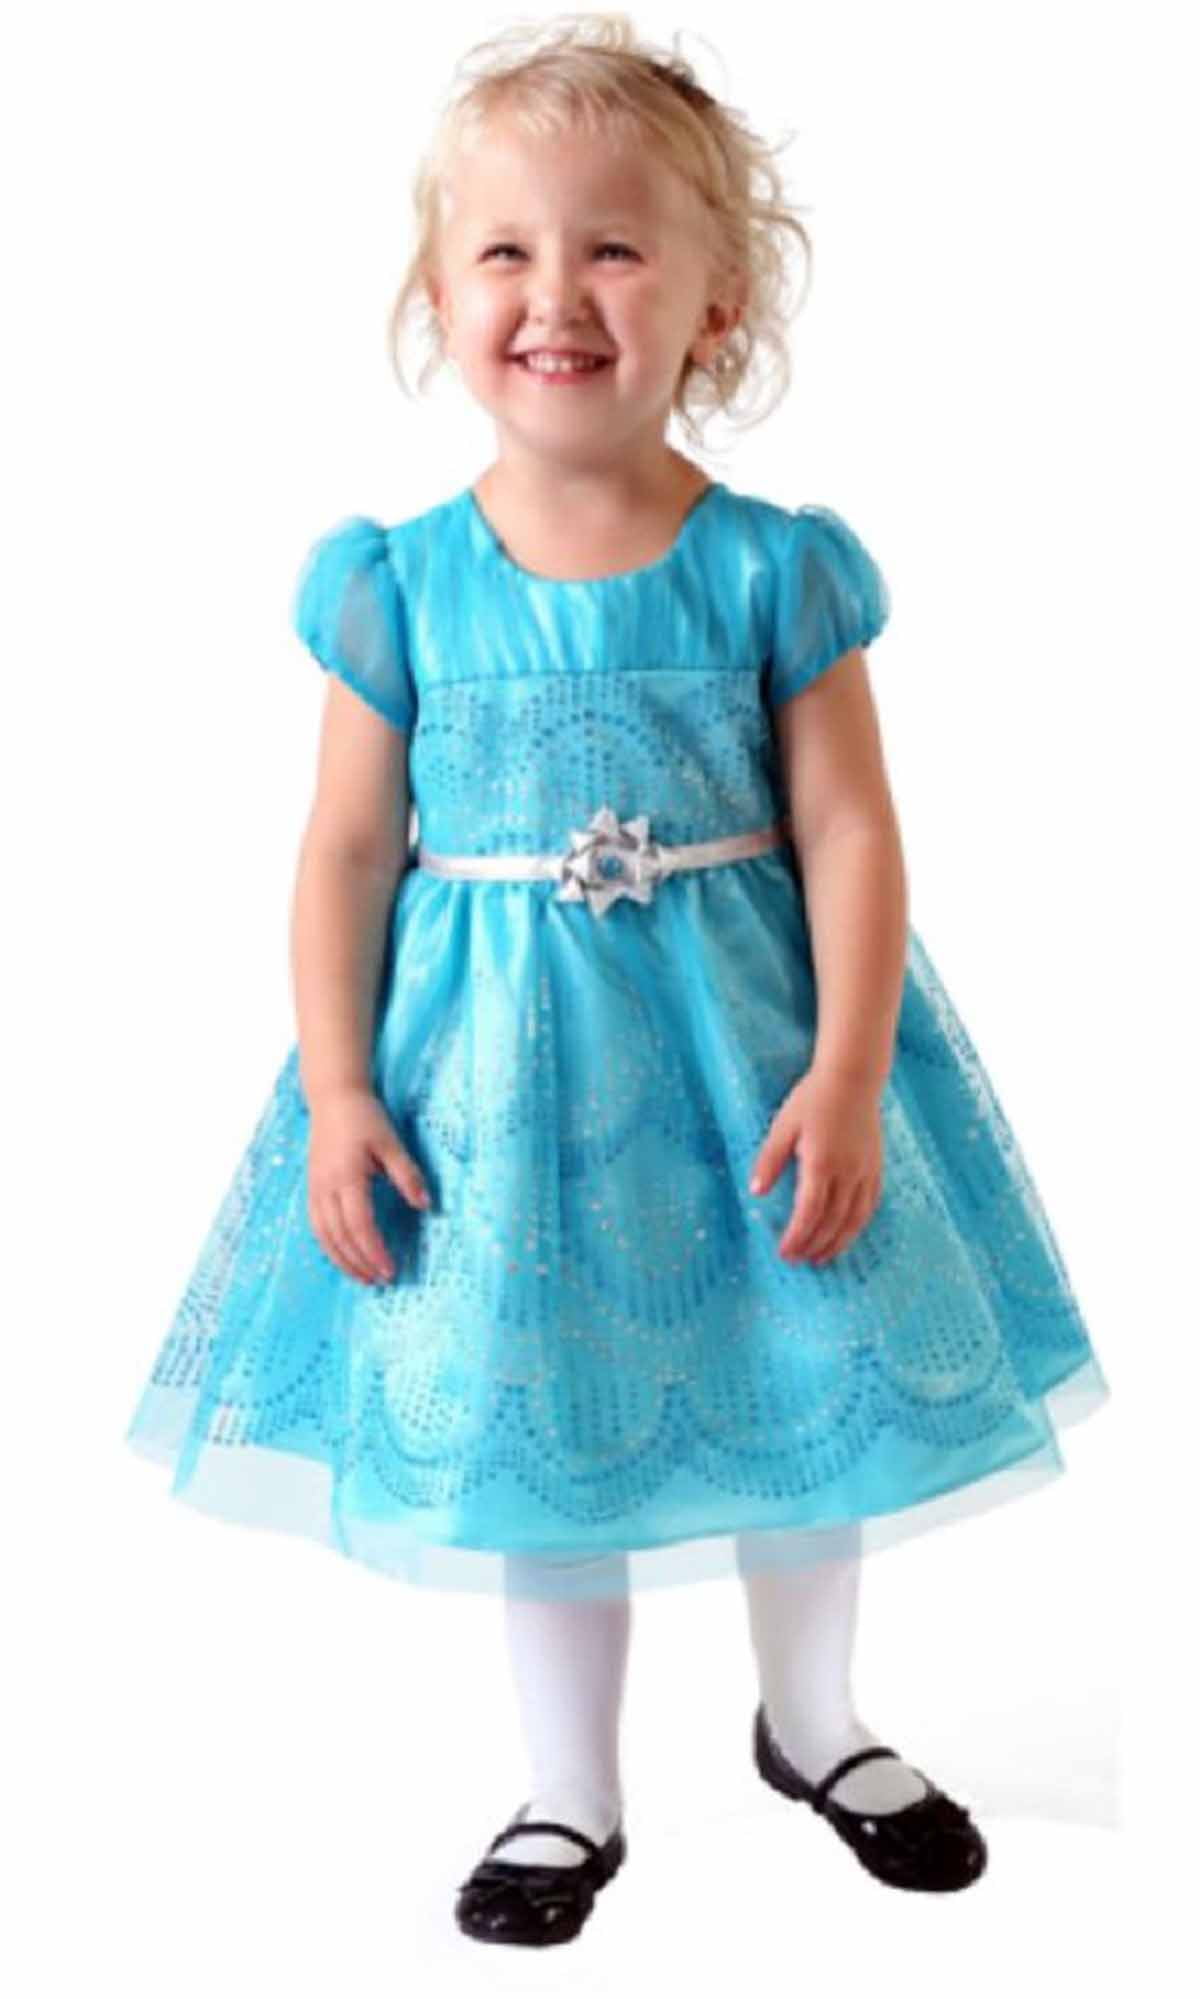 little girls party dresses